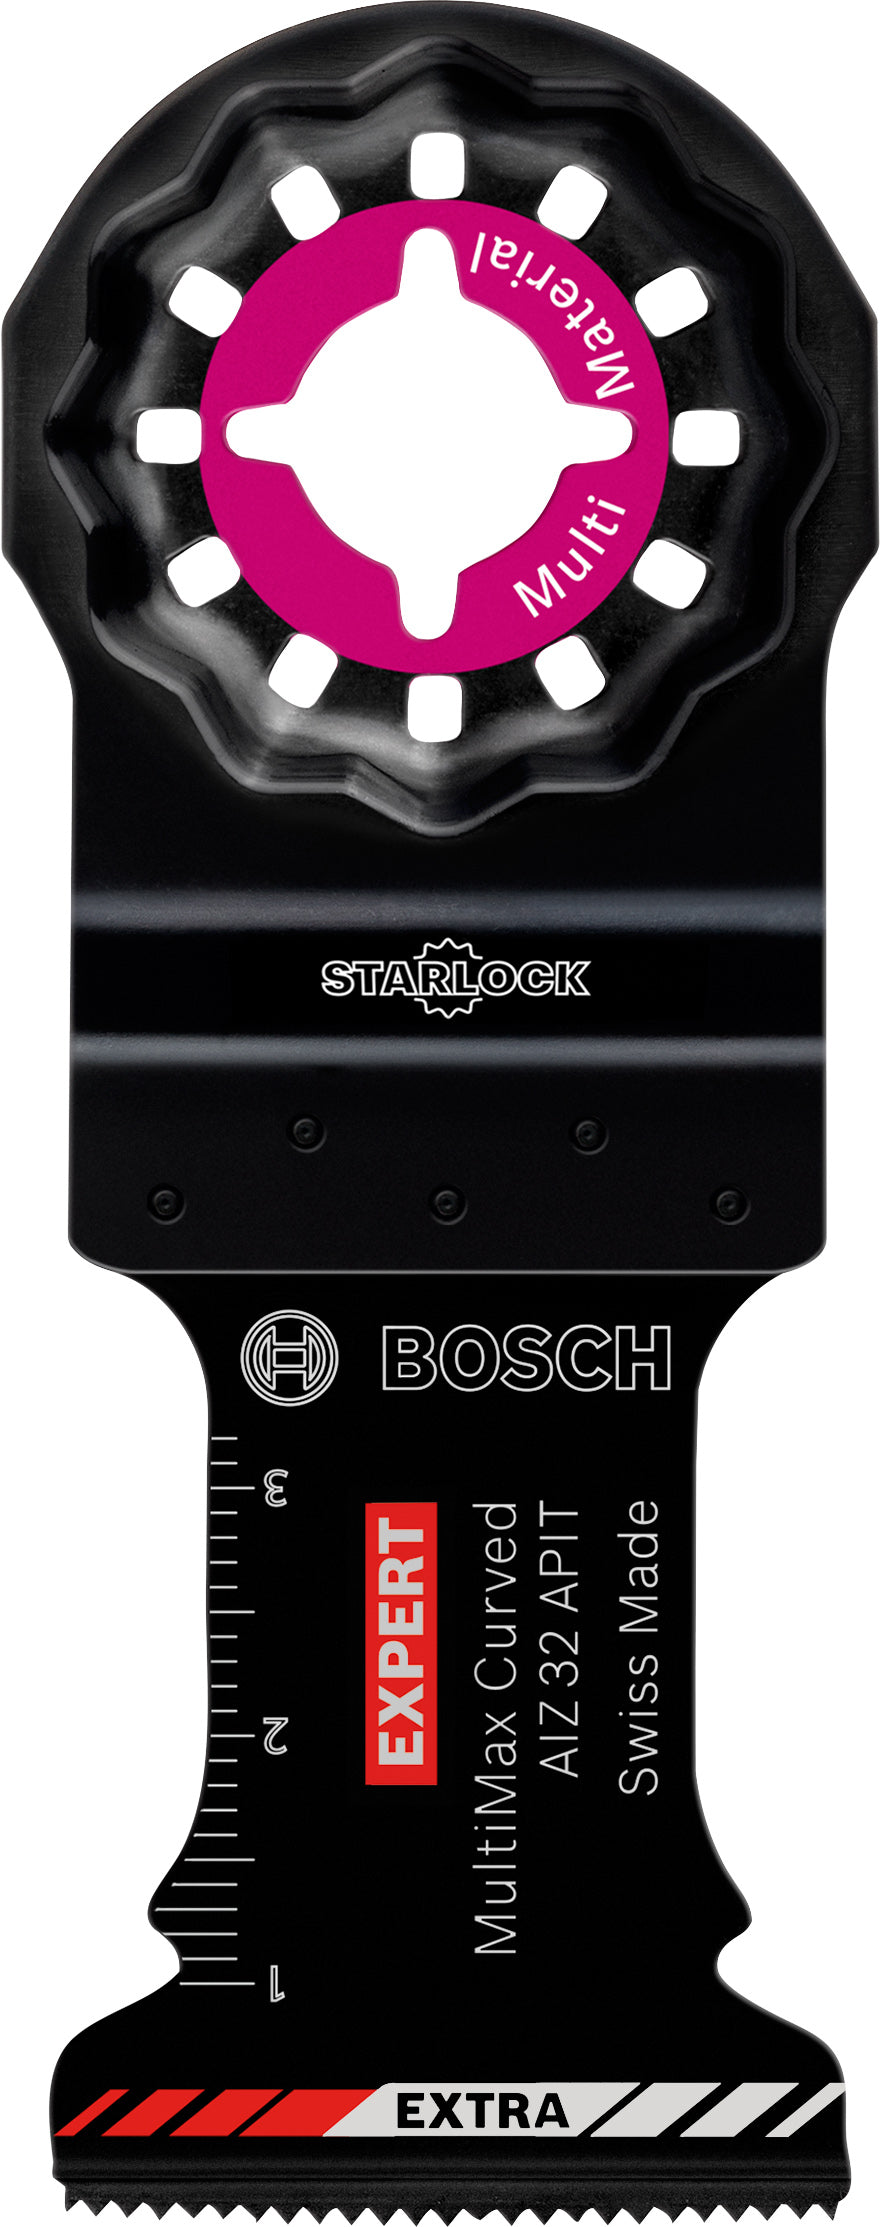 Bosch Professional Expert Starlock AIZ32APIT Coated Carbide Plunge Cut MultiMaterial - 1pcs